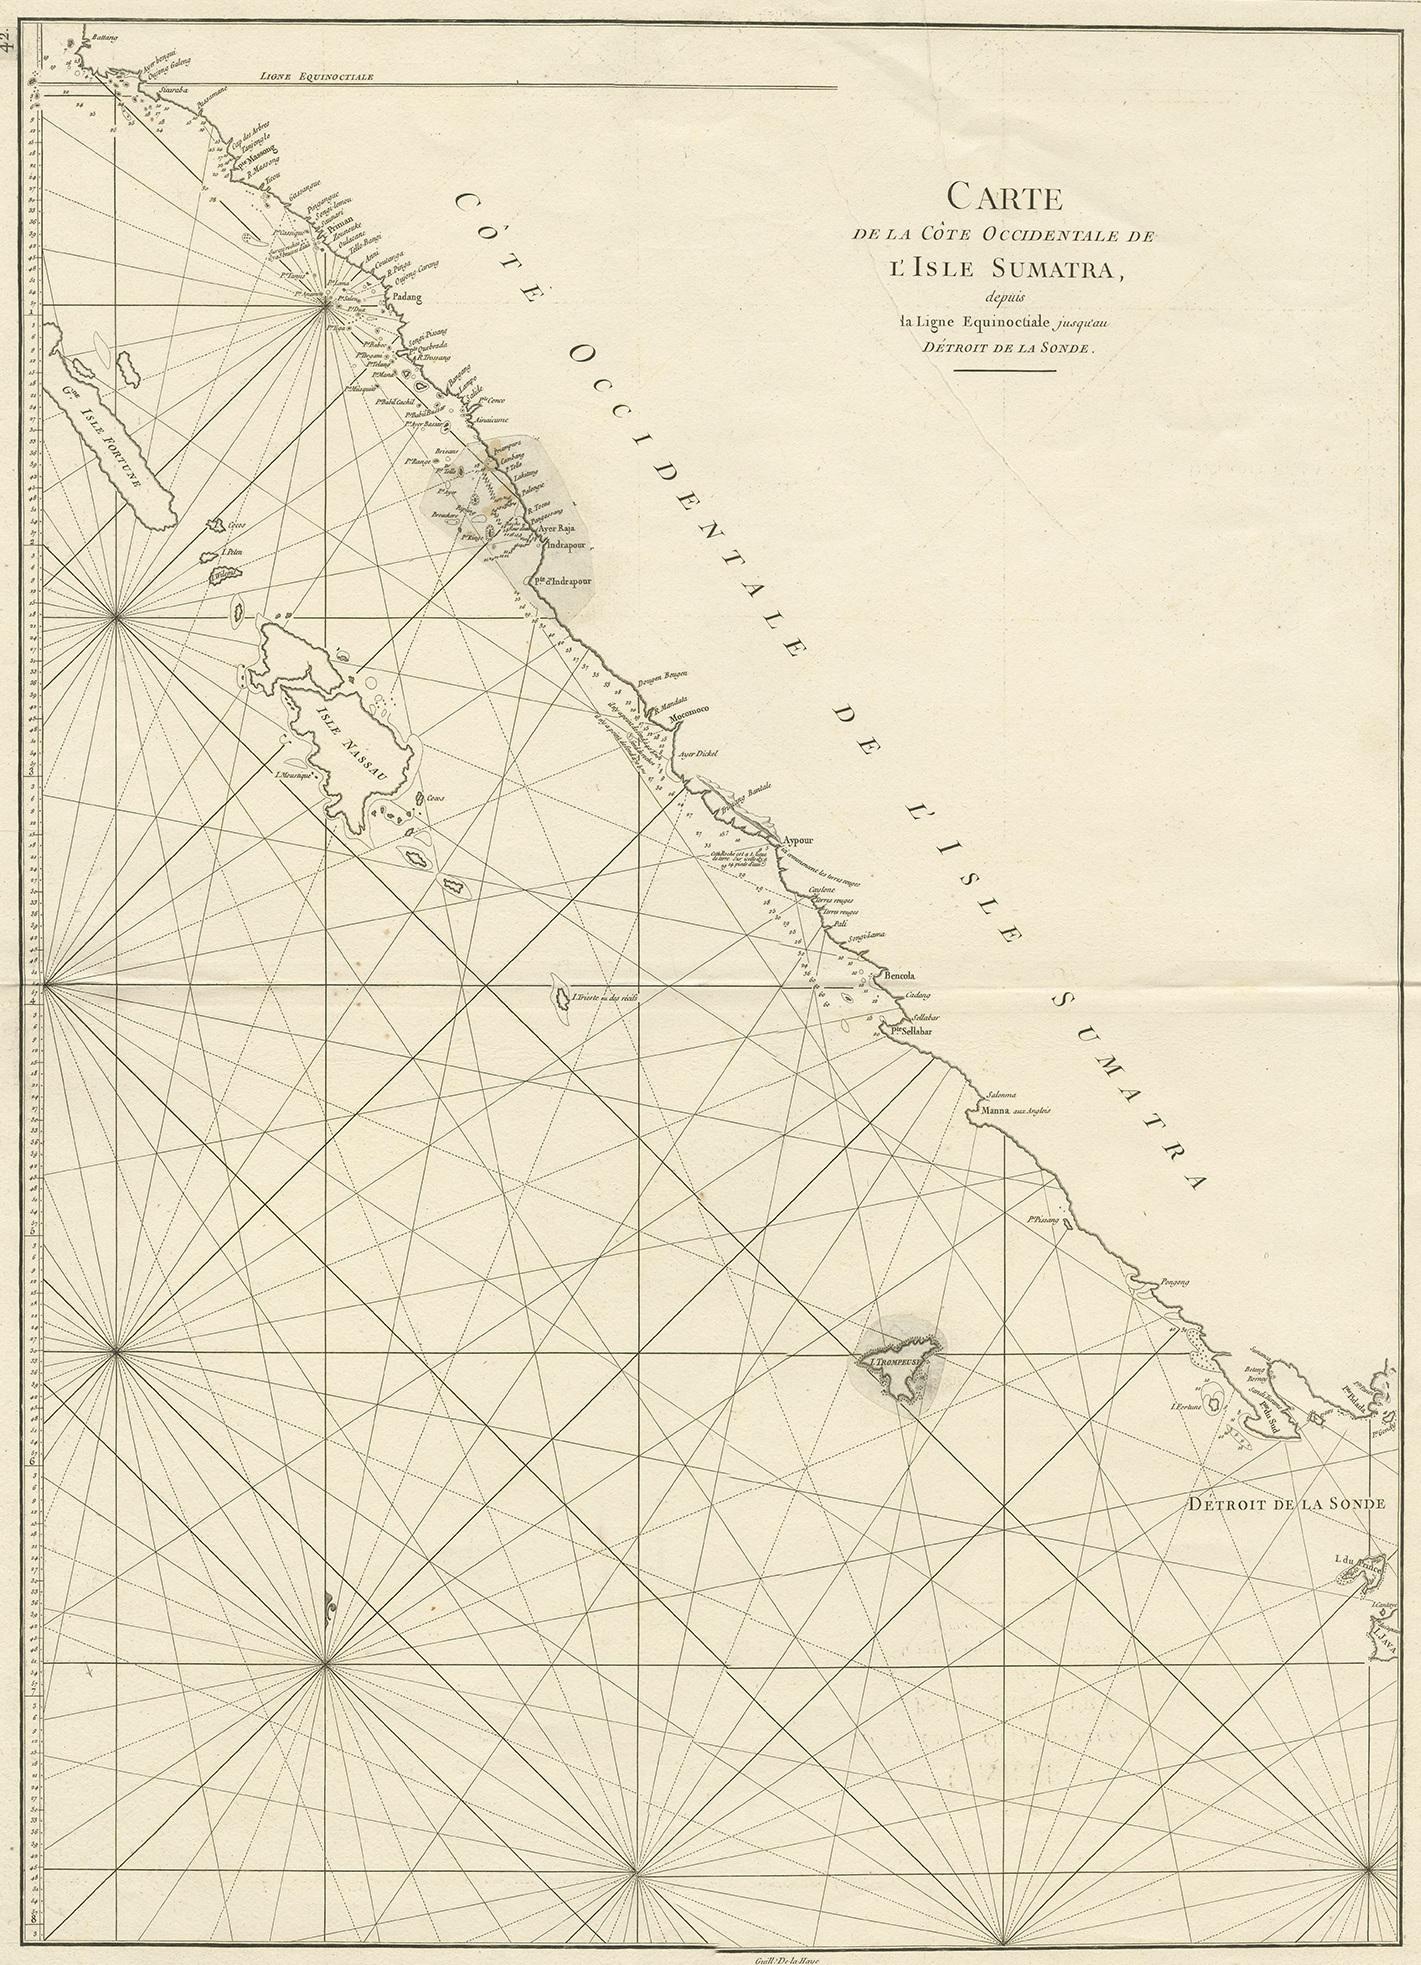 Antique map titled 'Carte de la Côte Occidentale de l'Isle Sumatra'. Sea chart of the part of the south-western coast of Sumatra with the Nassau (Nias) and Fortune isles. Engraved by G. de la Haye. Published in Paris by J.B. d'Apres de